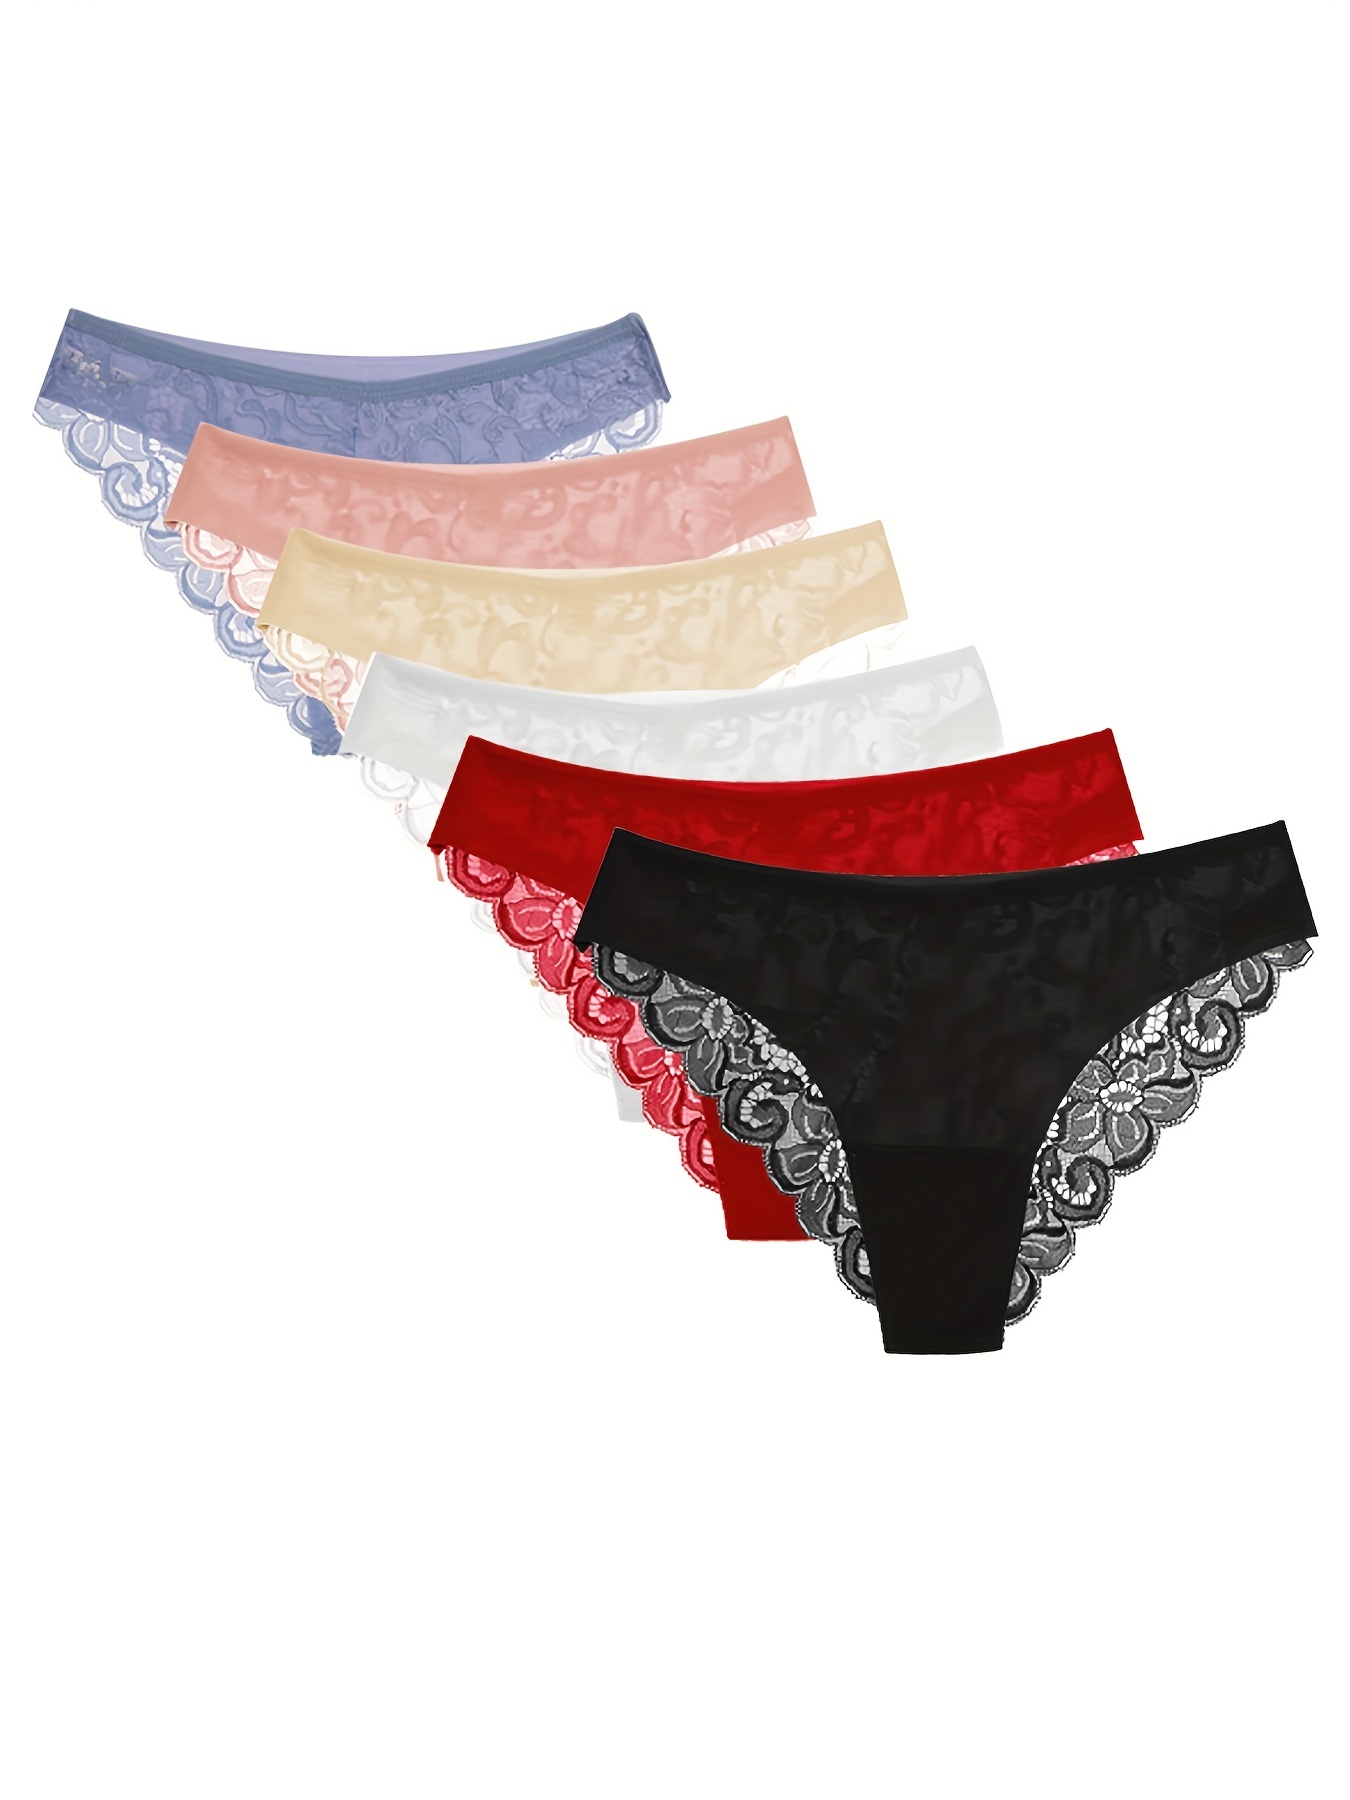 6-Piece Women's Mesh Breathable Scallop Contrast Lace Panties